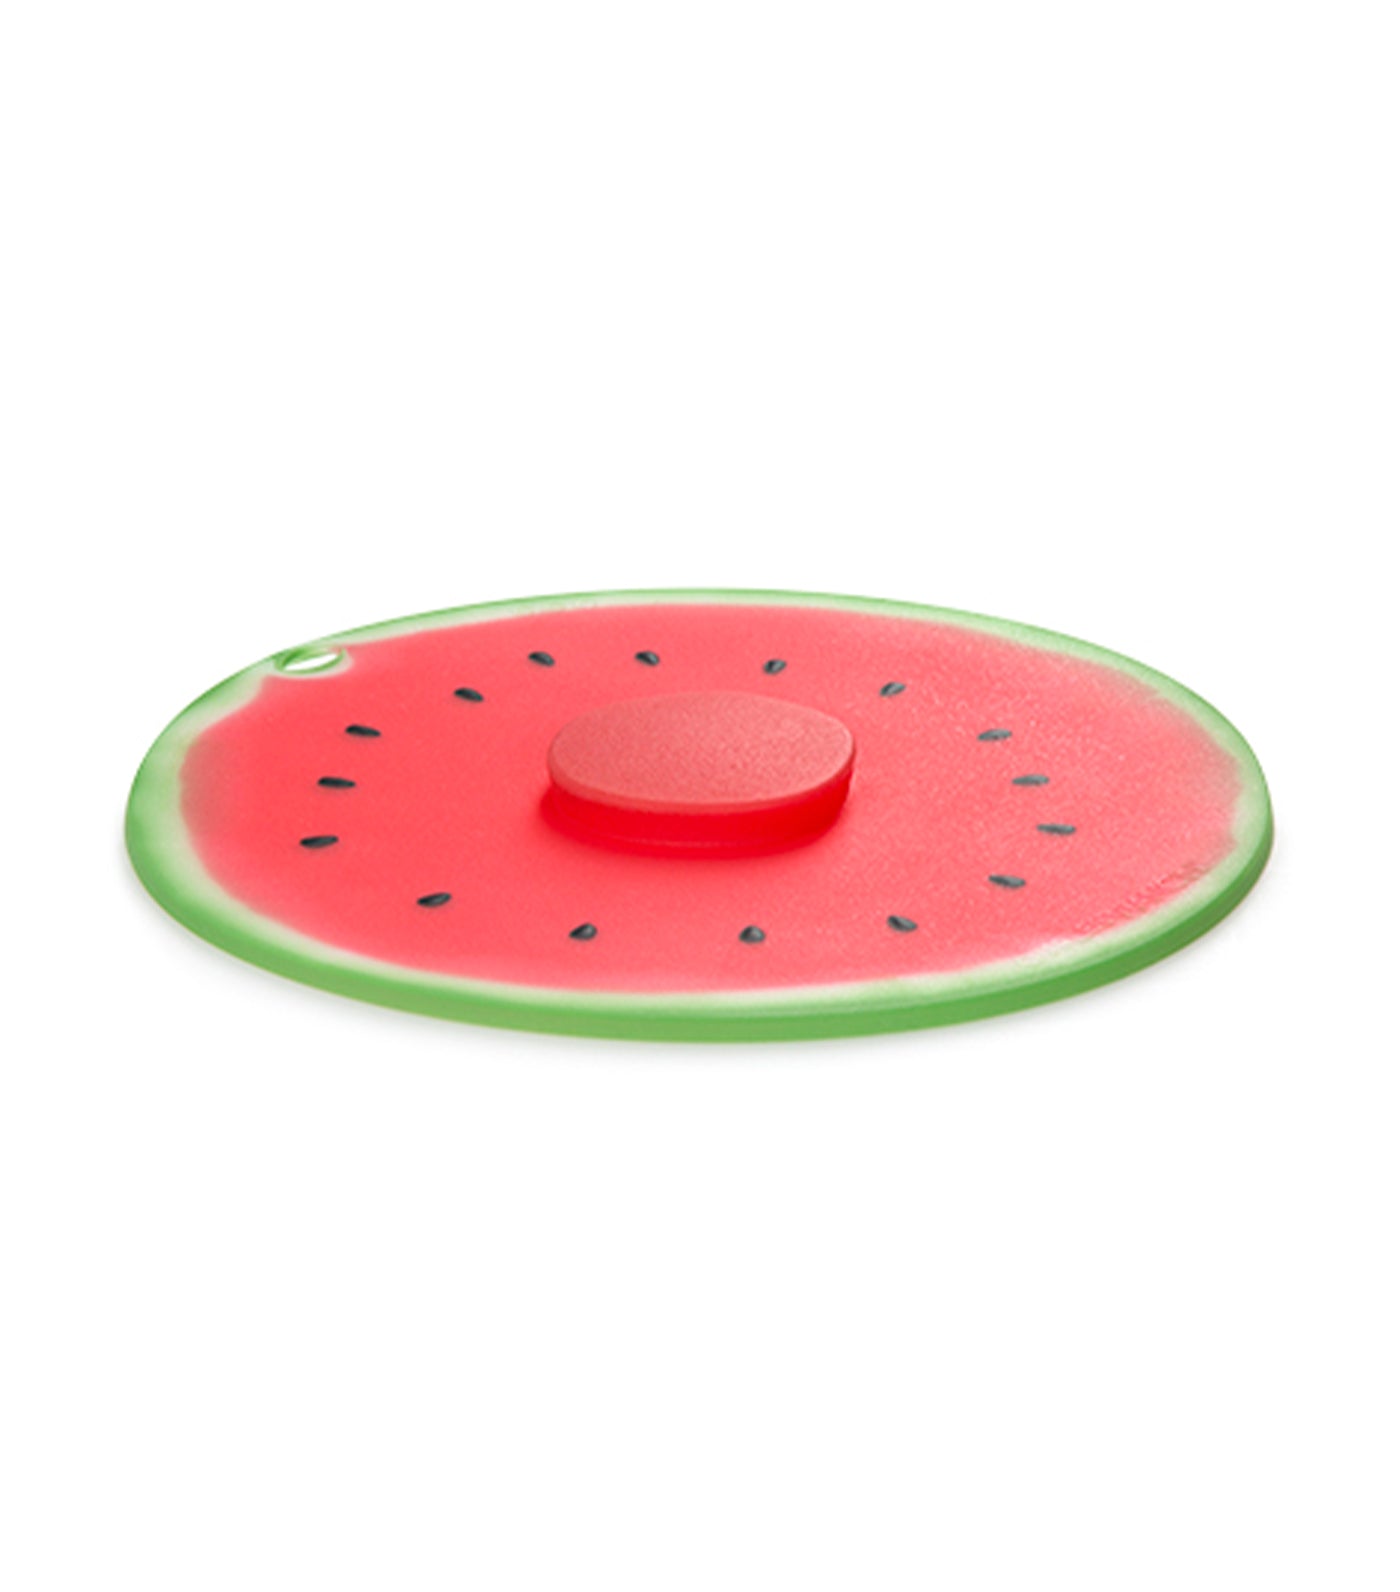 charles viancin watermelon - medium small lid